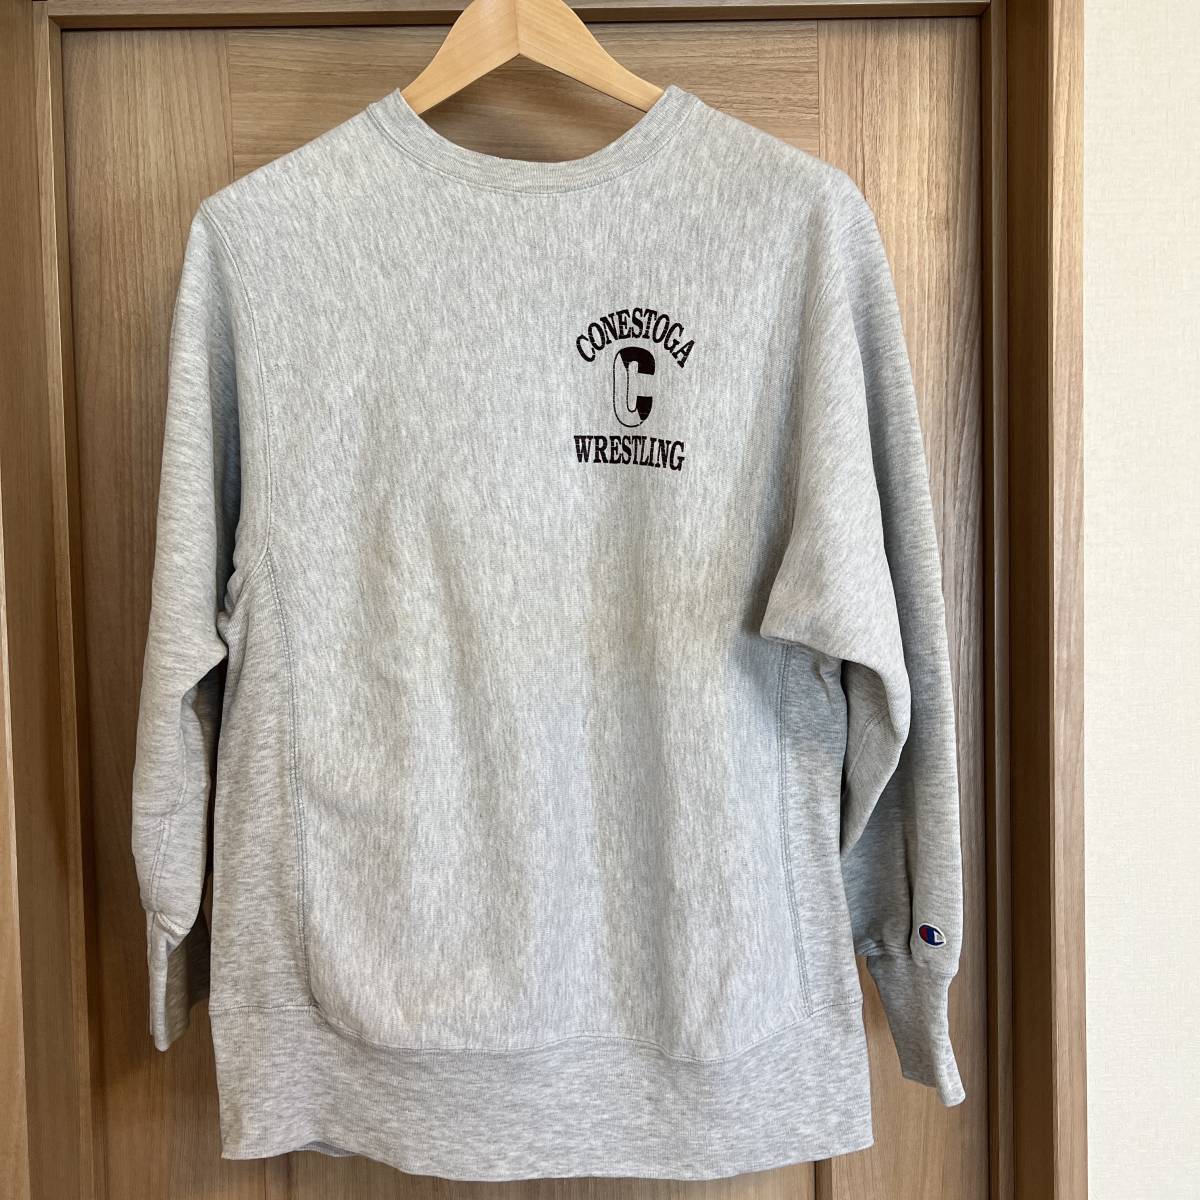 90s vintage sweat shirt リバース 両面 アニマル noonaesthetics.com